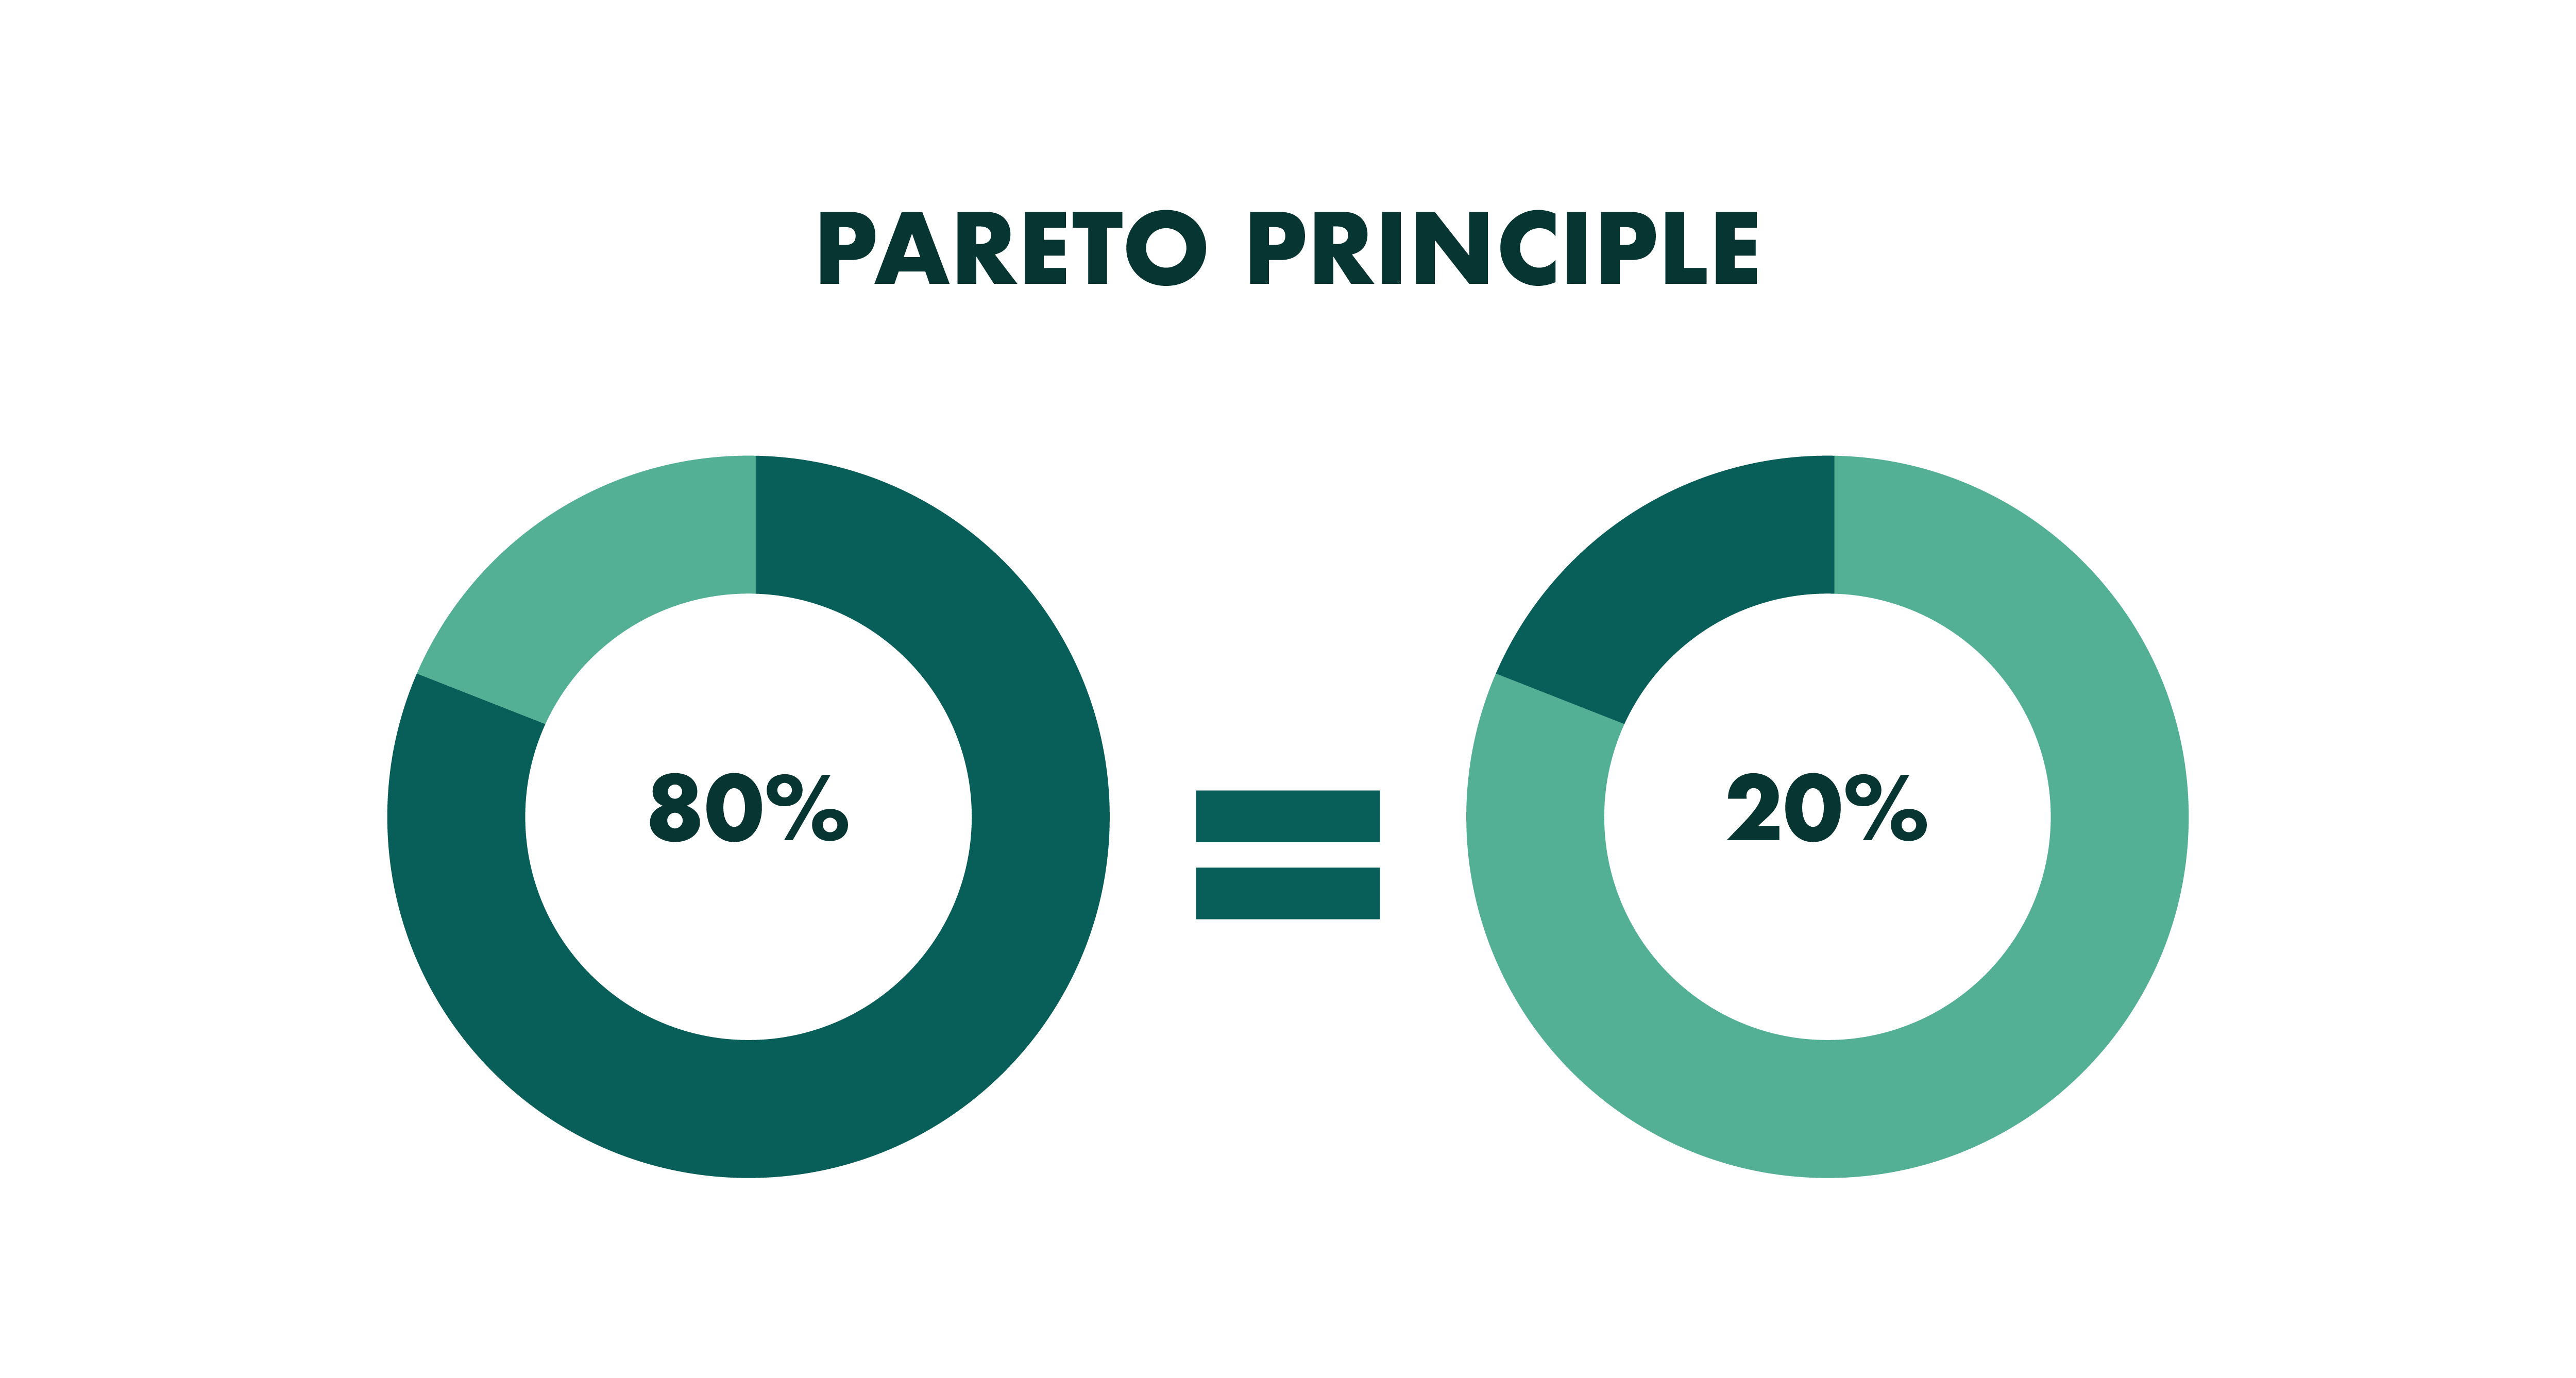 Pareto principle - 80/20 rule